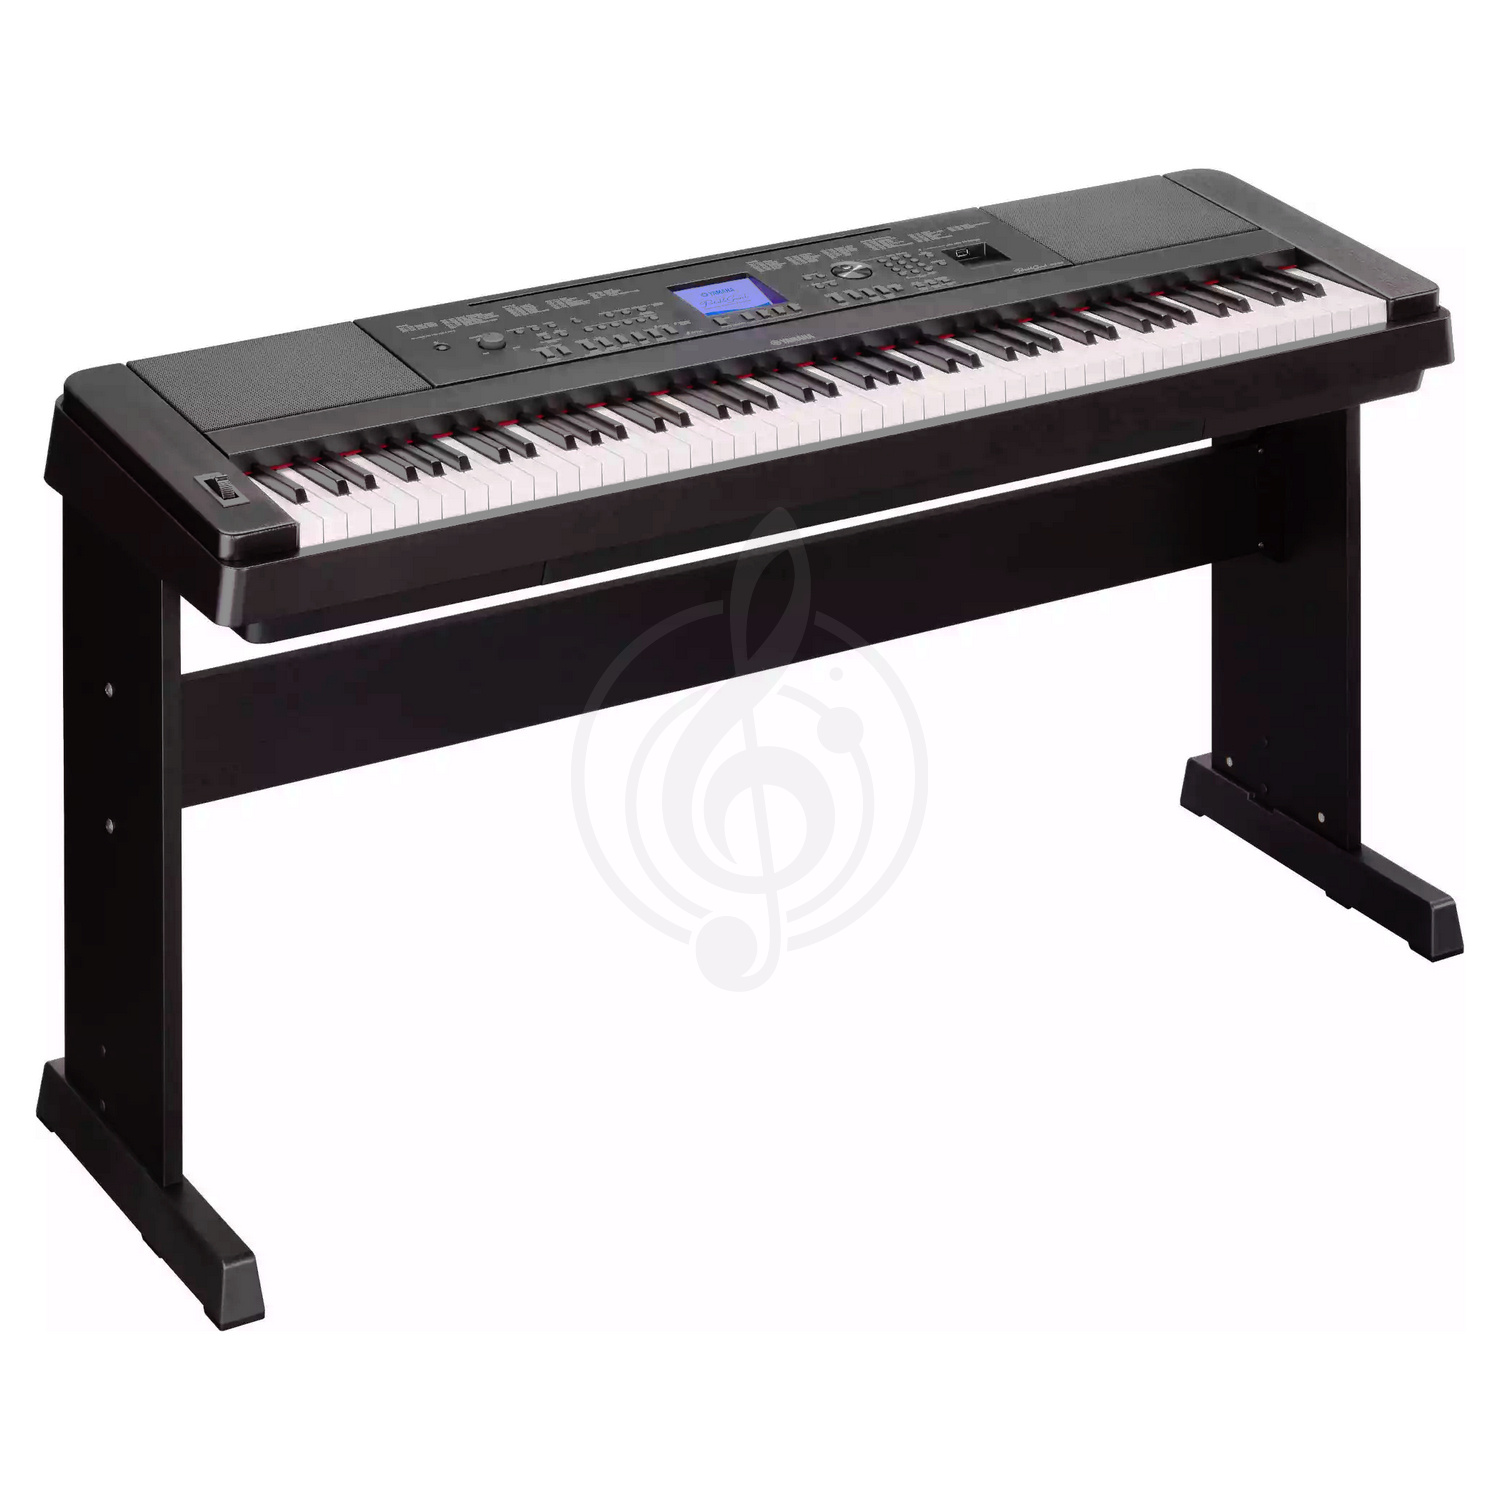 Цифровое пианино Цифровые пианино Yamaha Yamaha DGX-660B - интерактивное цифровое пианино, 88кл. DGX-660B - фото 1